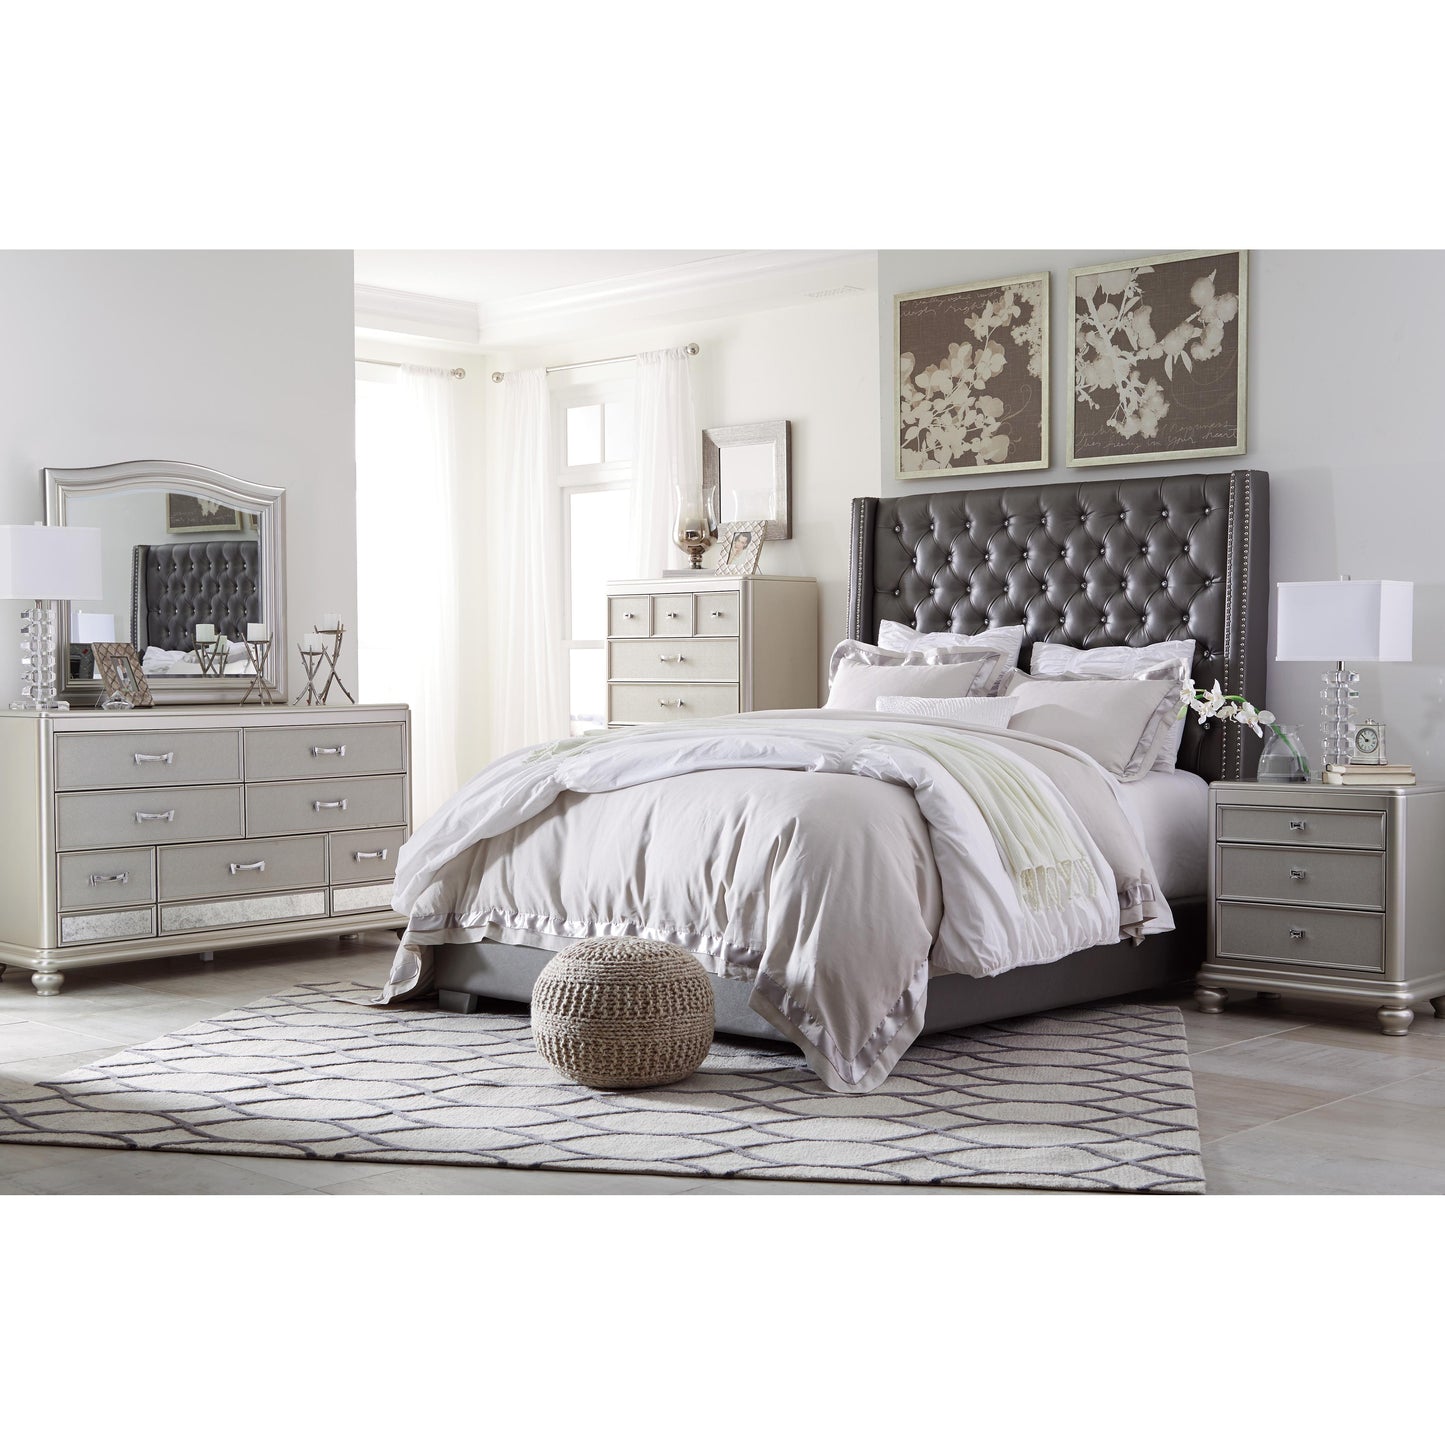 Signature Design by Ashley Coralayne B650B33 7 pc King Upholstered Bedroom Set IMAGE 1